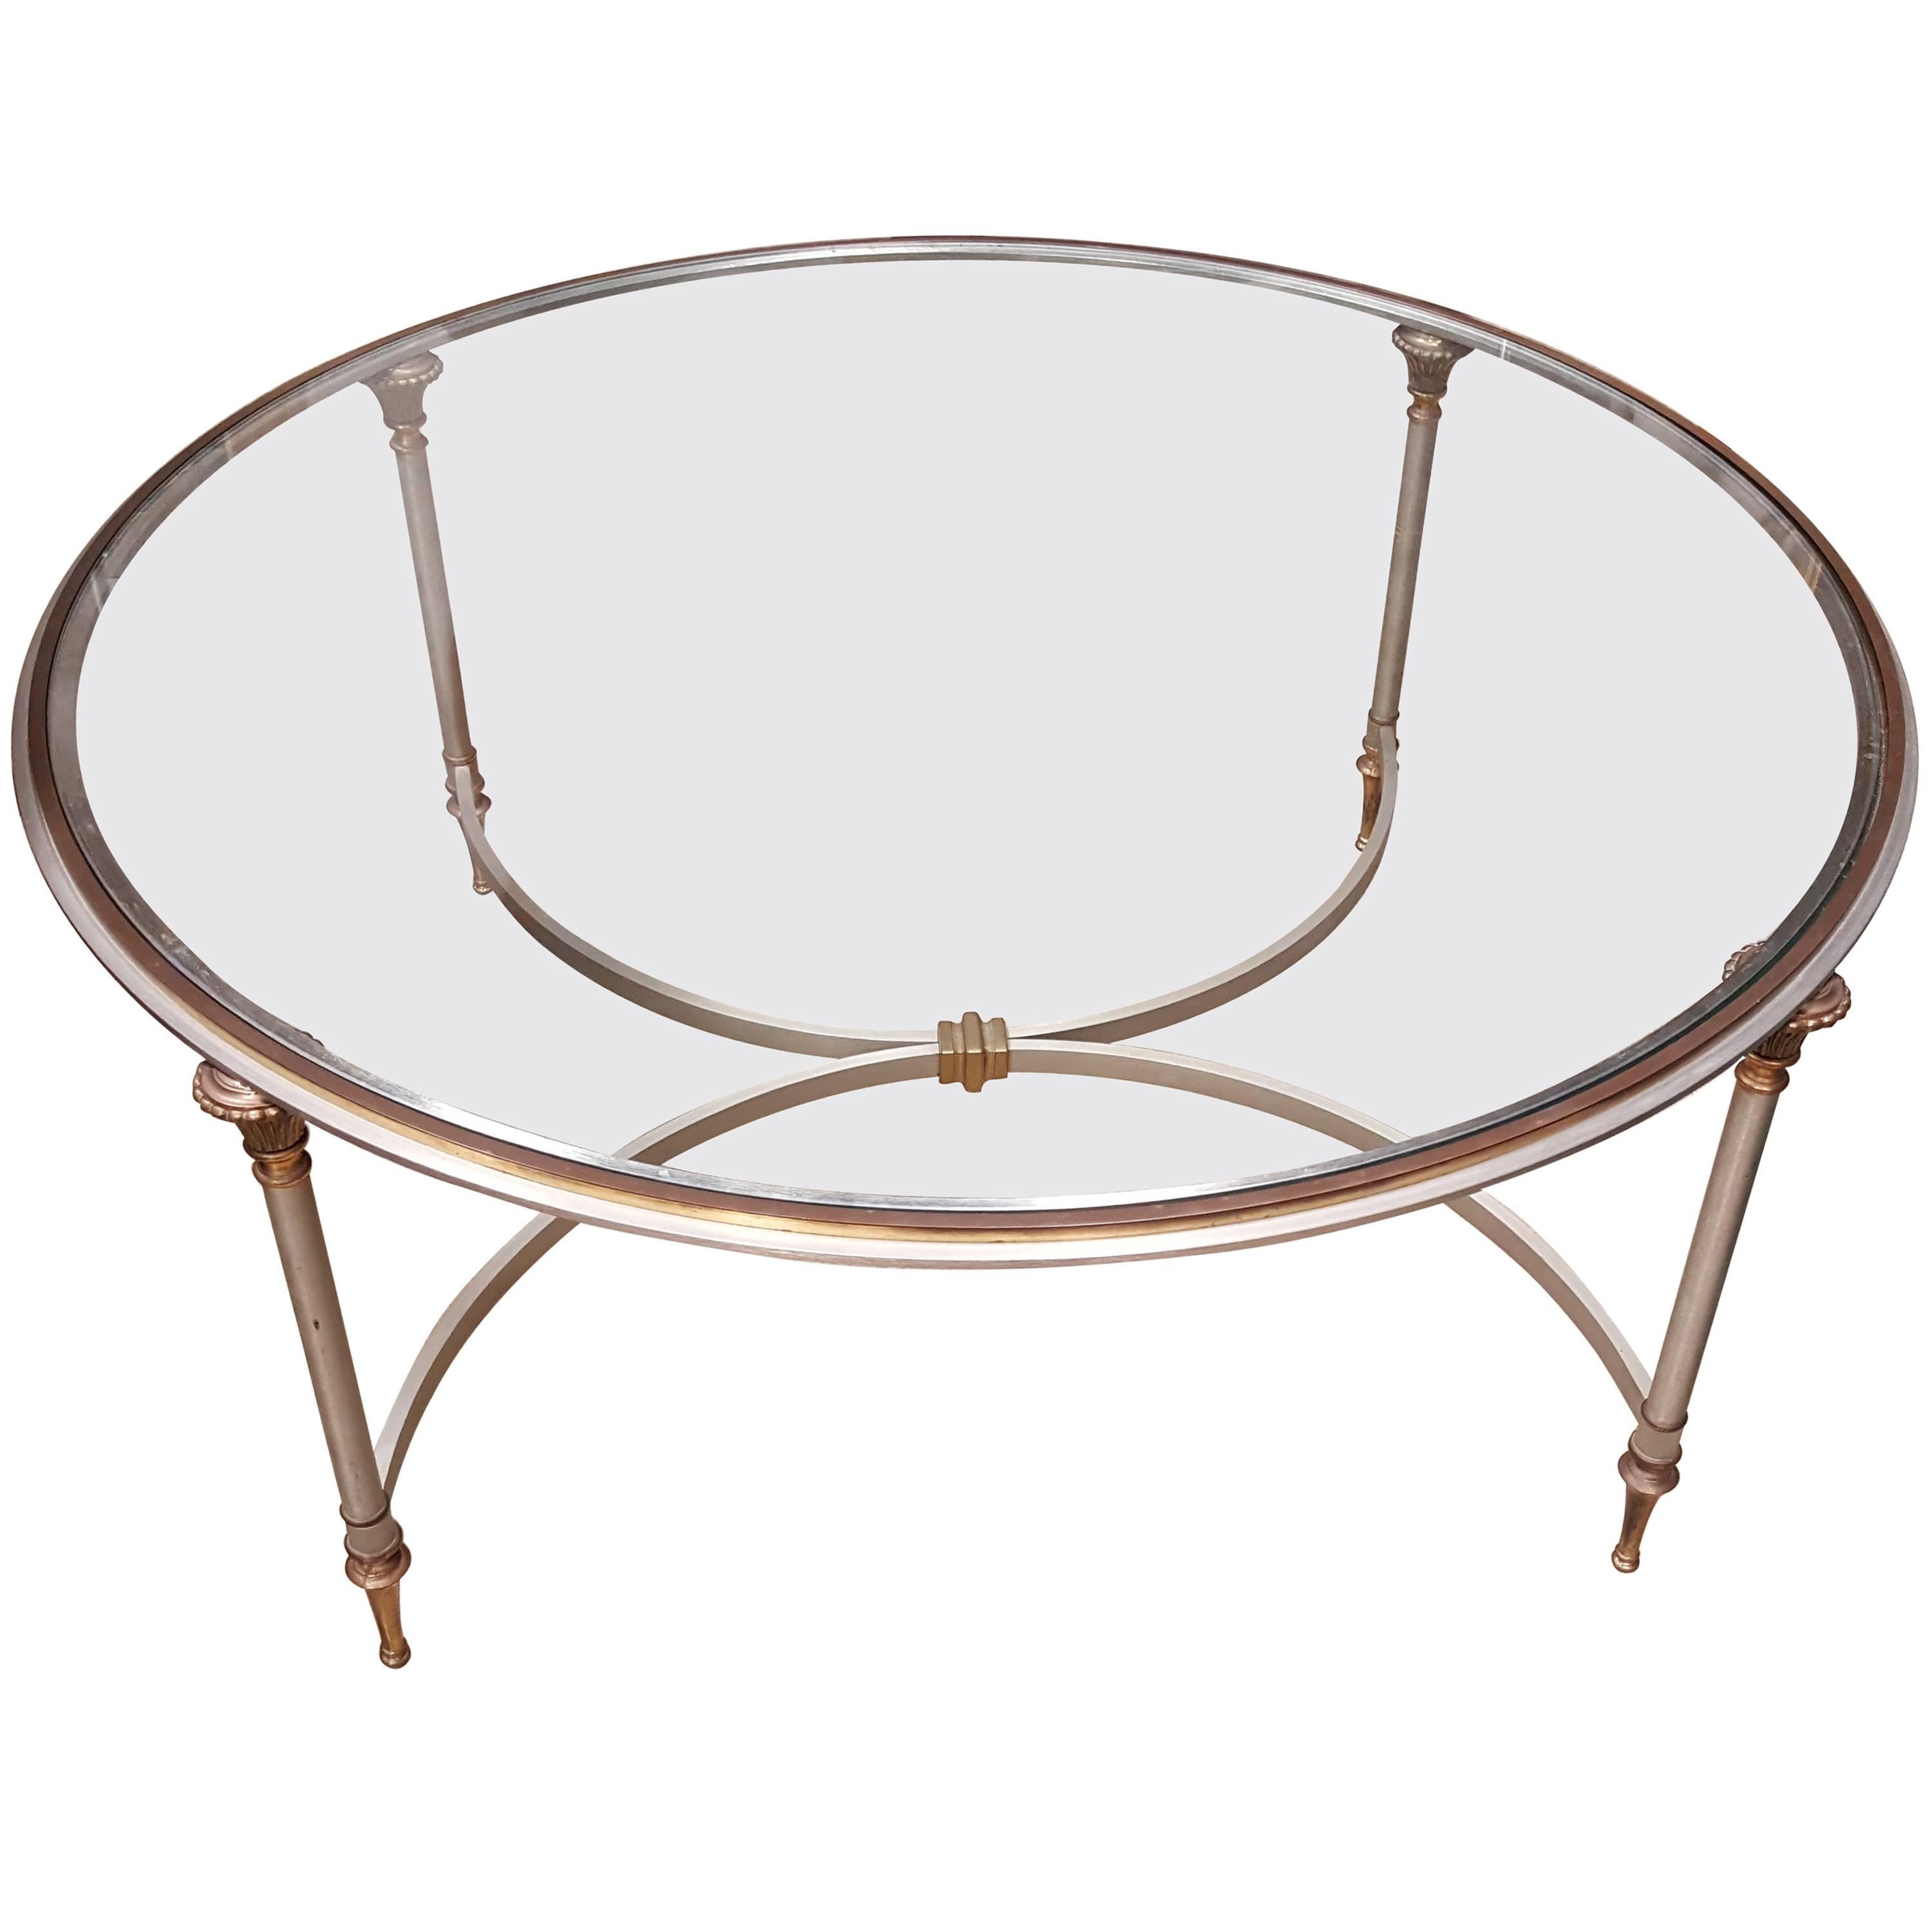 Steel and Brass Circular Glass Top Coffee Table